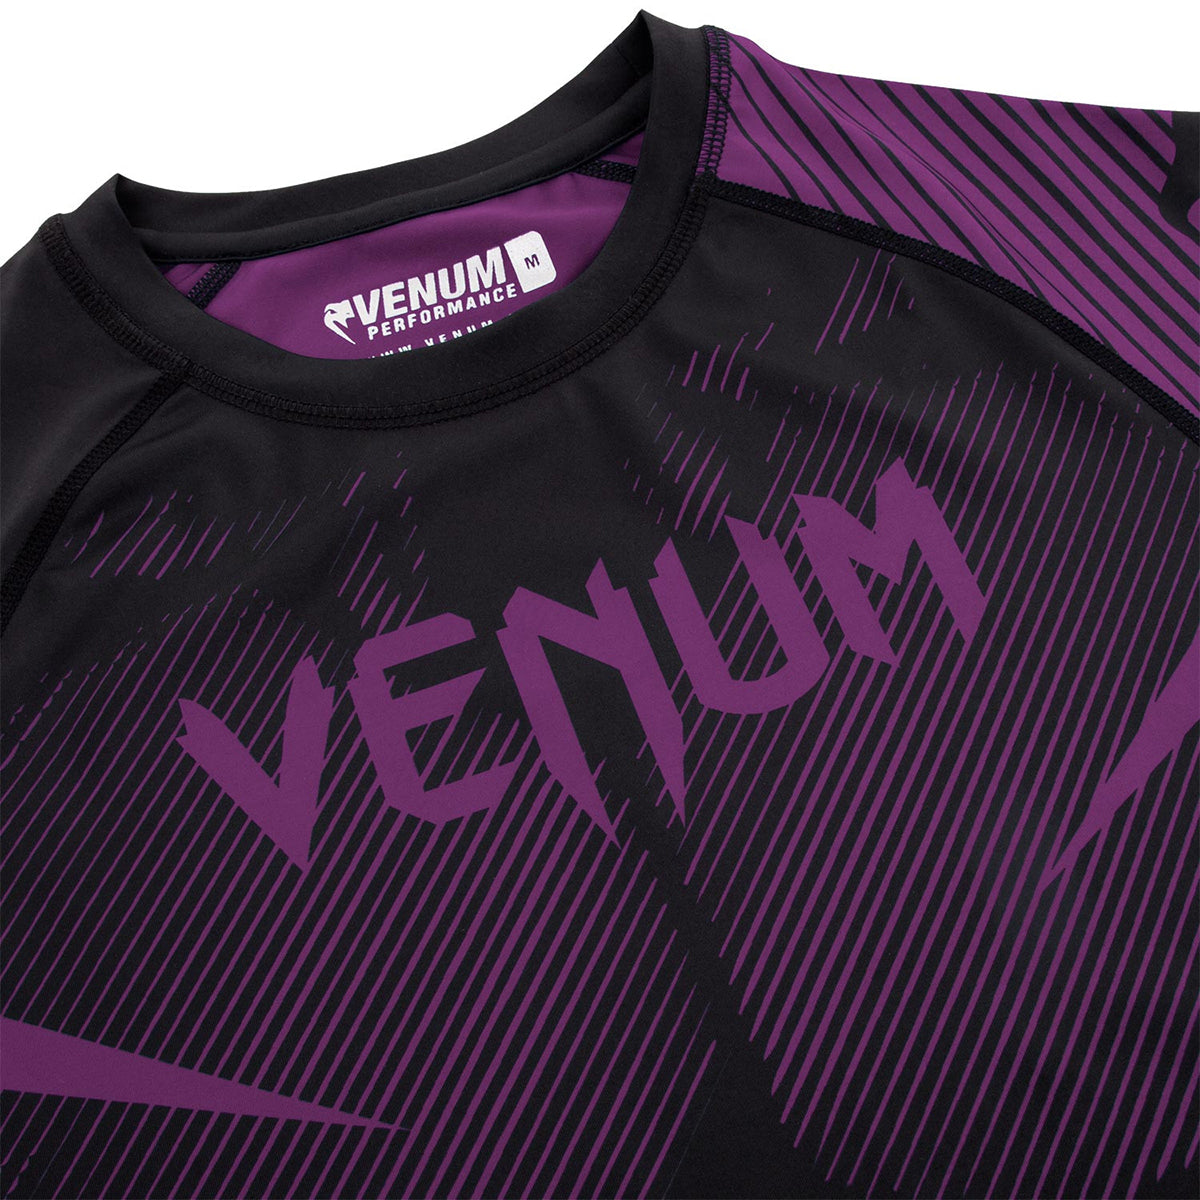 Venum No-Gi 2.0 Long Sleeve MMA Compression Rashguard Venum